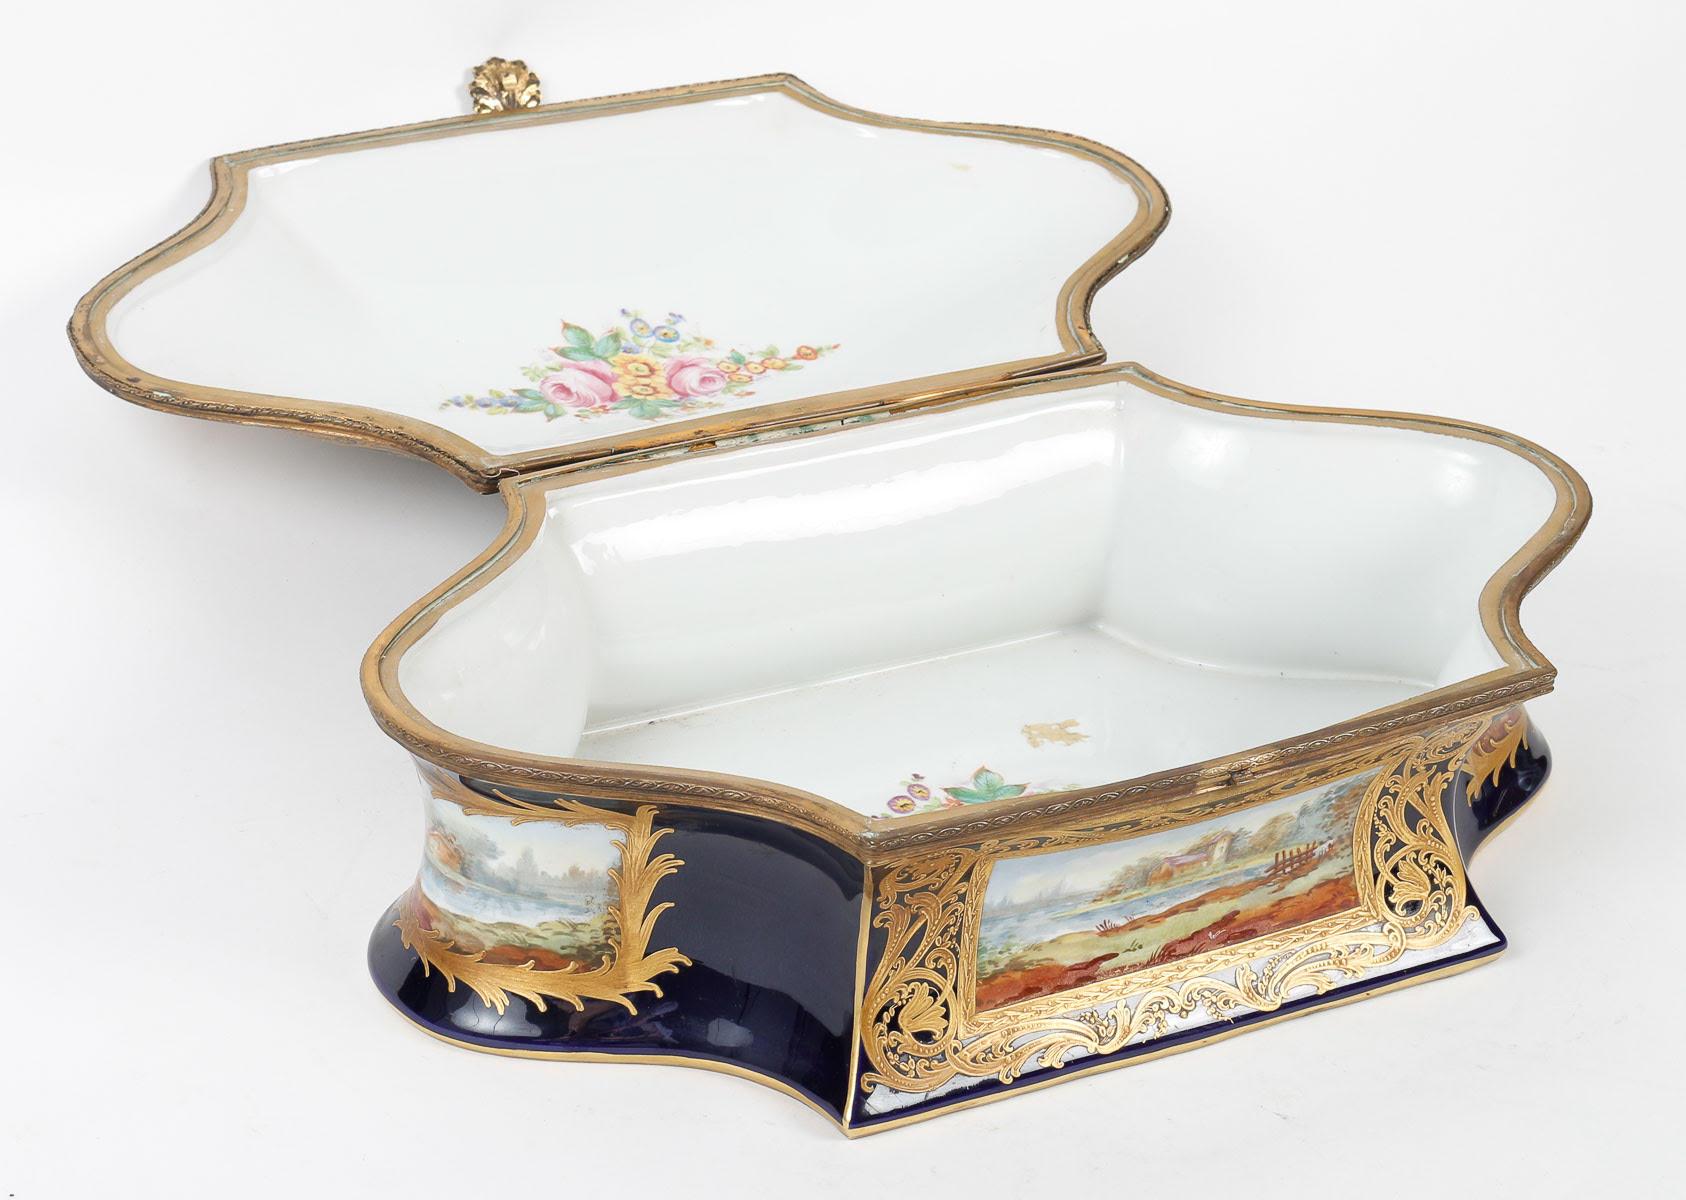 Napoleon III Large Jewellery Box in the Taste of Sèvres, 19th Century.